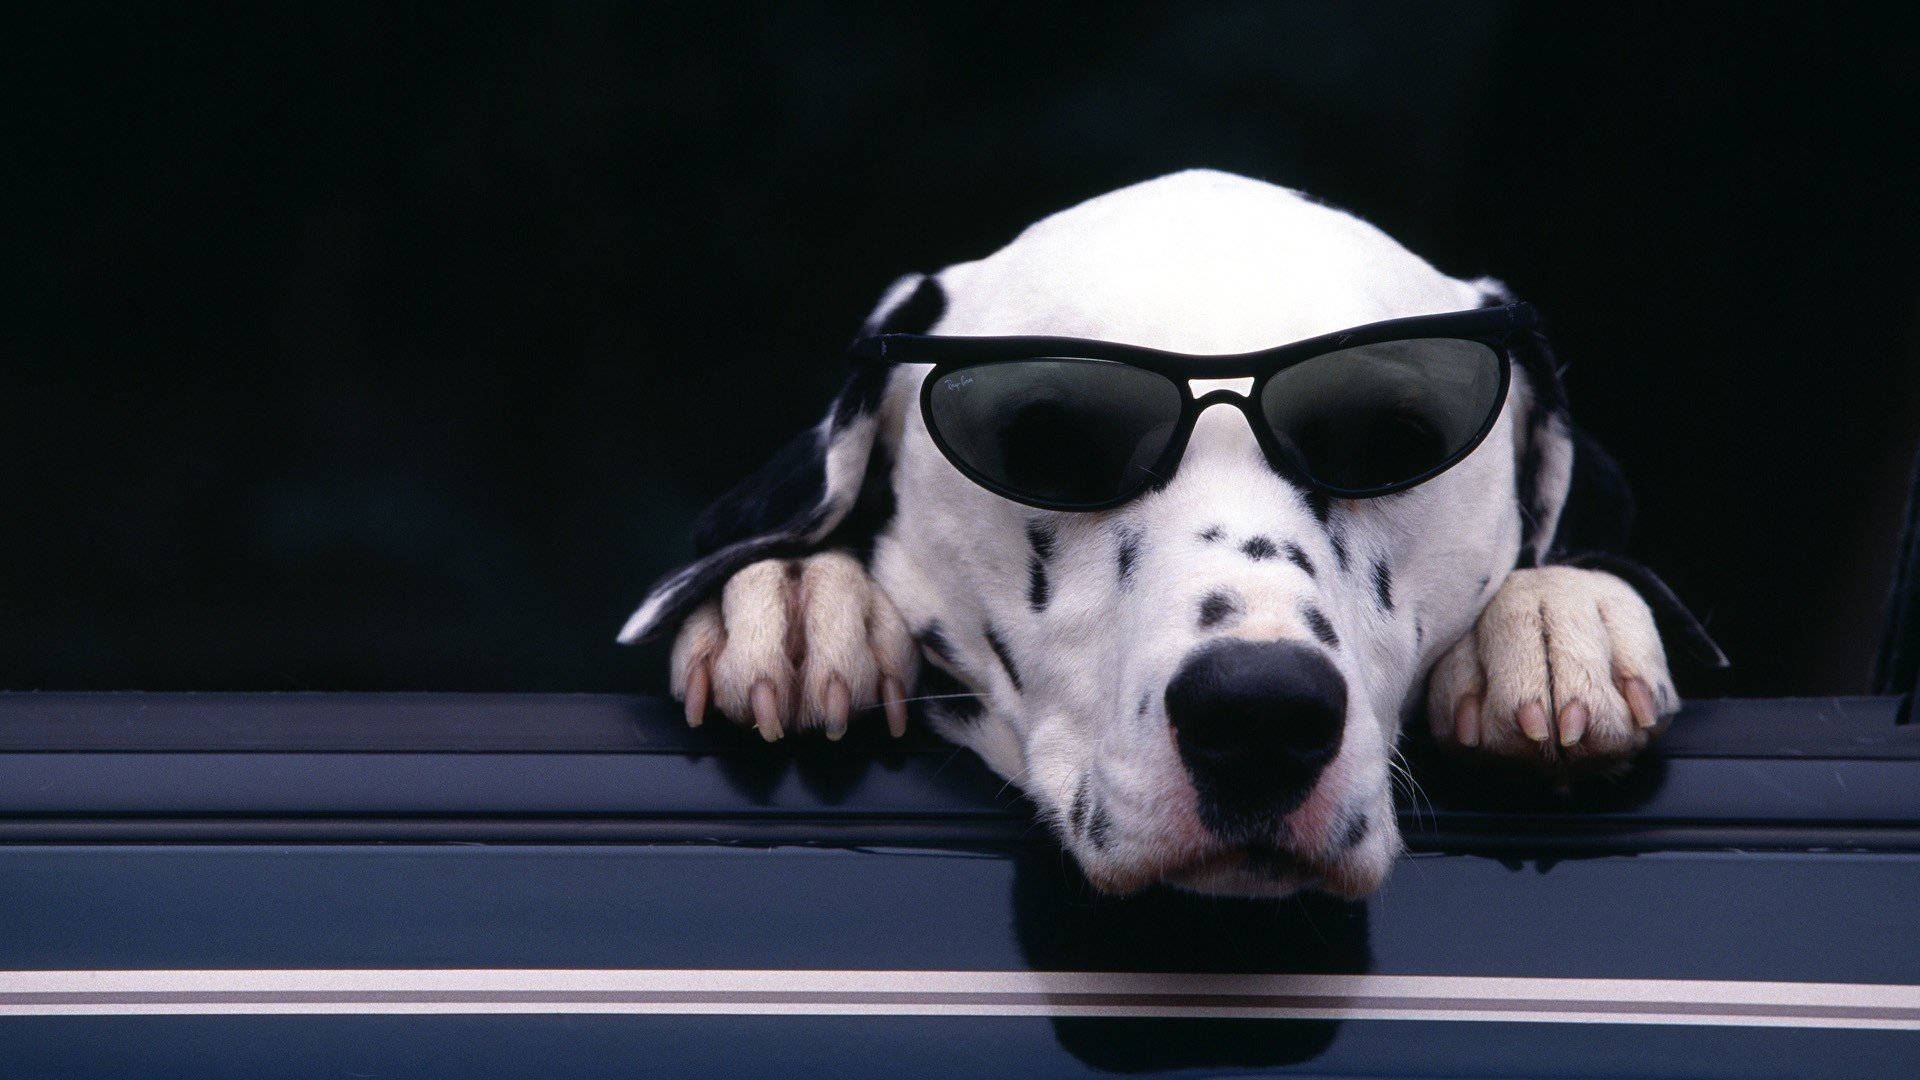 Dalmatian In Sunglasses Background